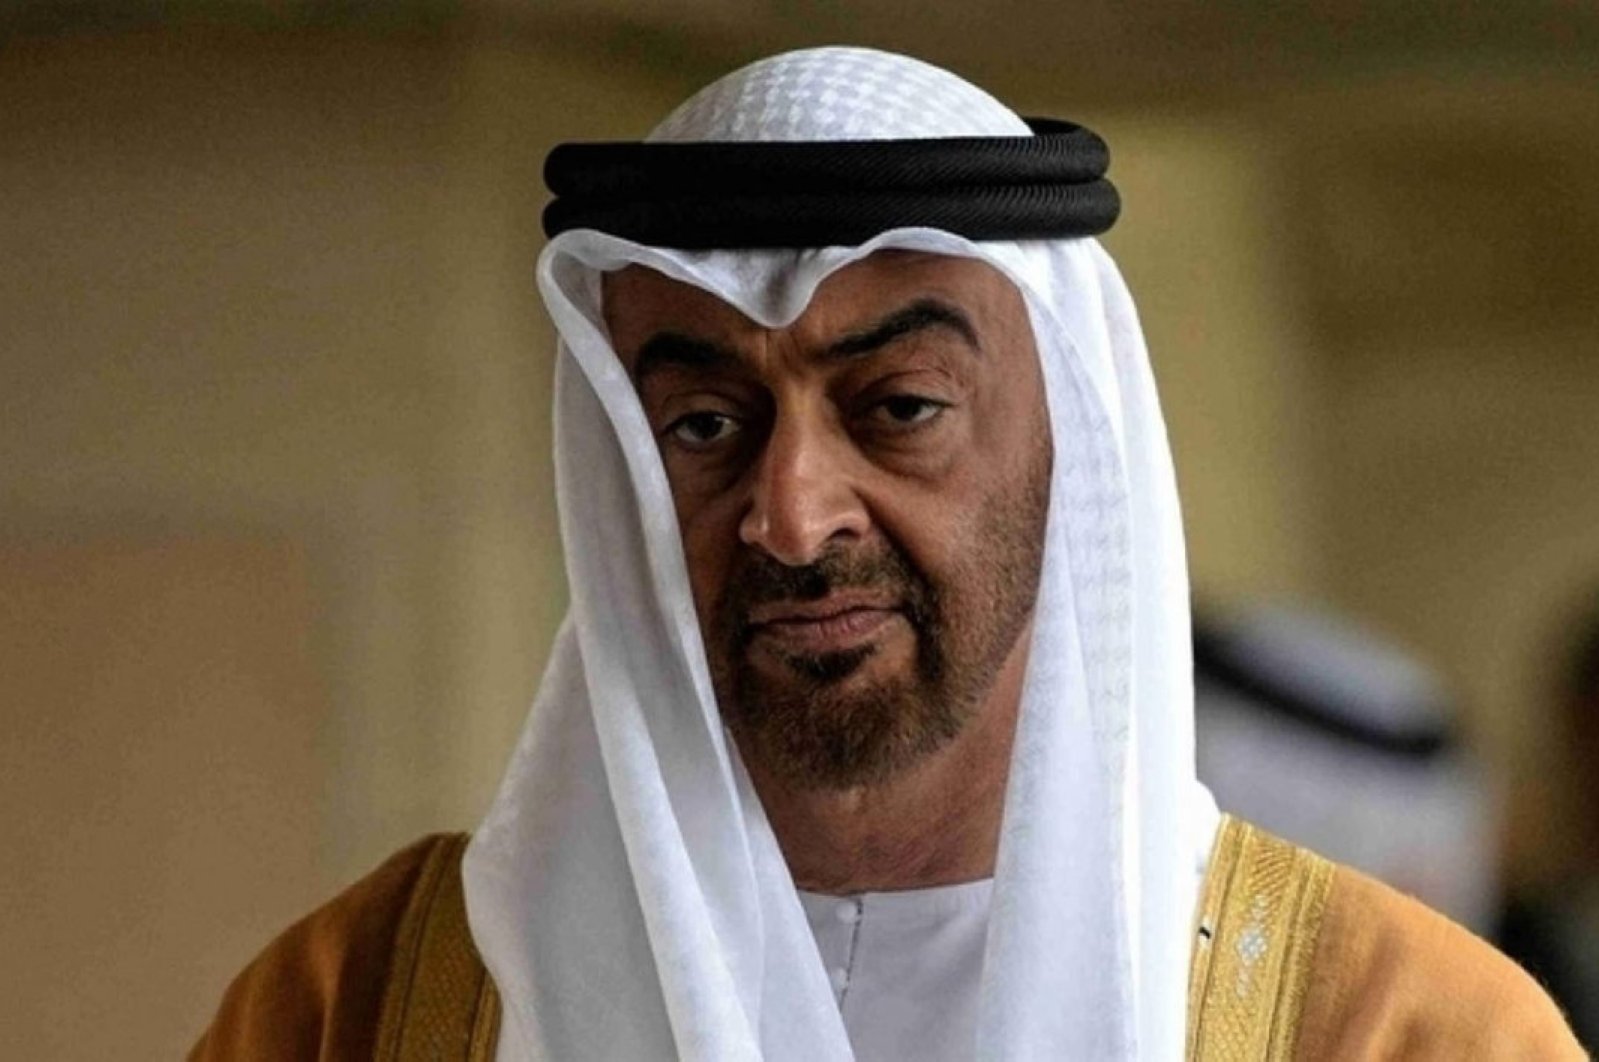 Mohammed bin Zayed (MBZ), the crown prince of Abu Dhabi